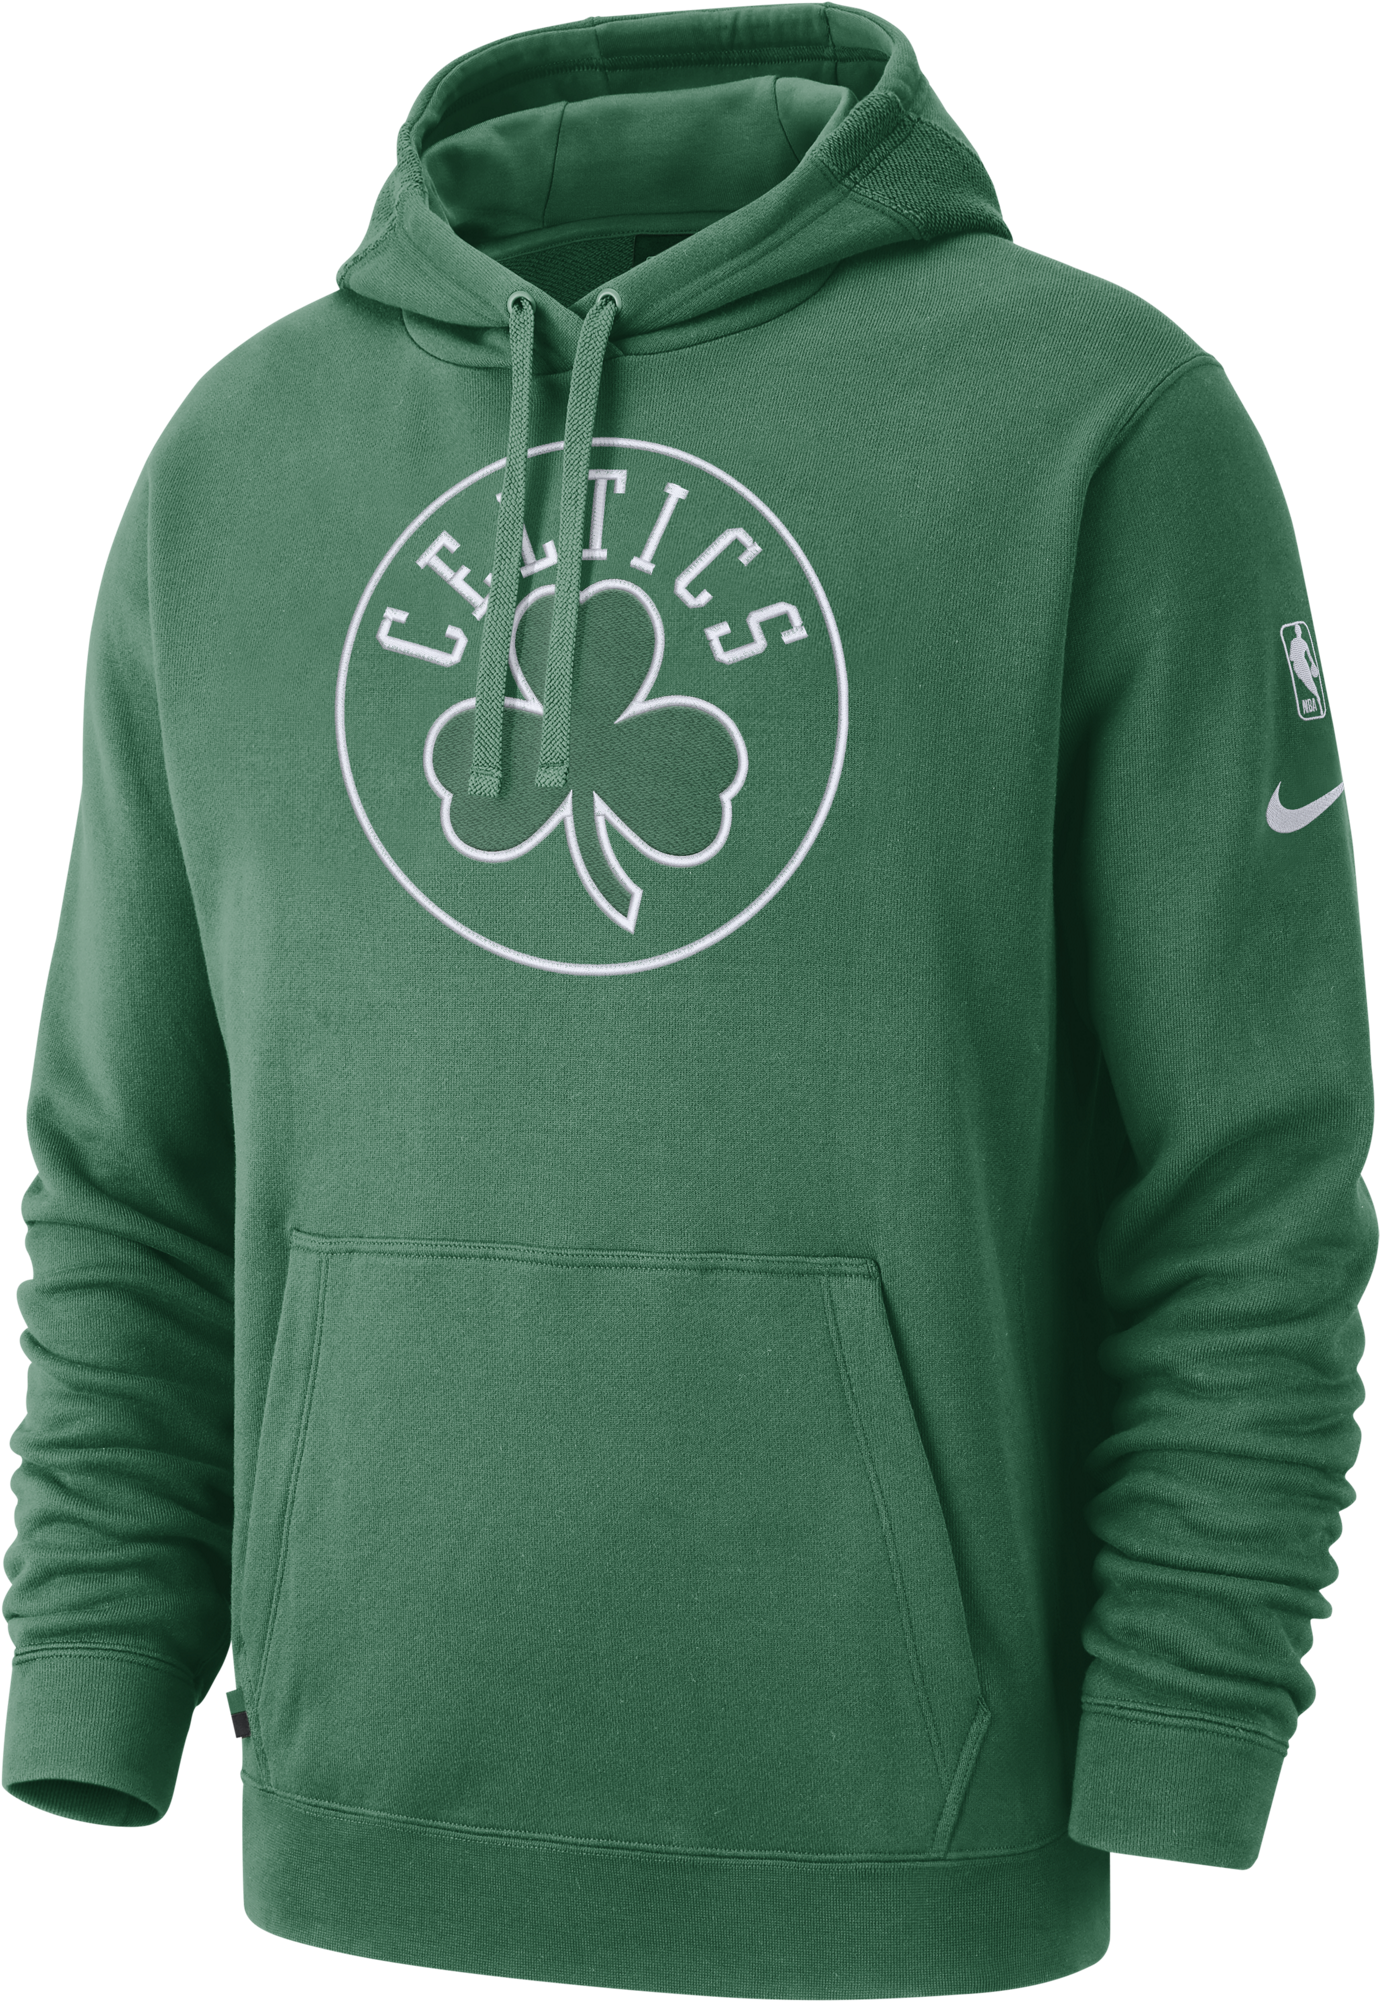 Nike Nba Boston Celtics Courtside Hoodie - Boston Celtics Nike Hoodie (2000x2000), Png Download